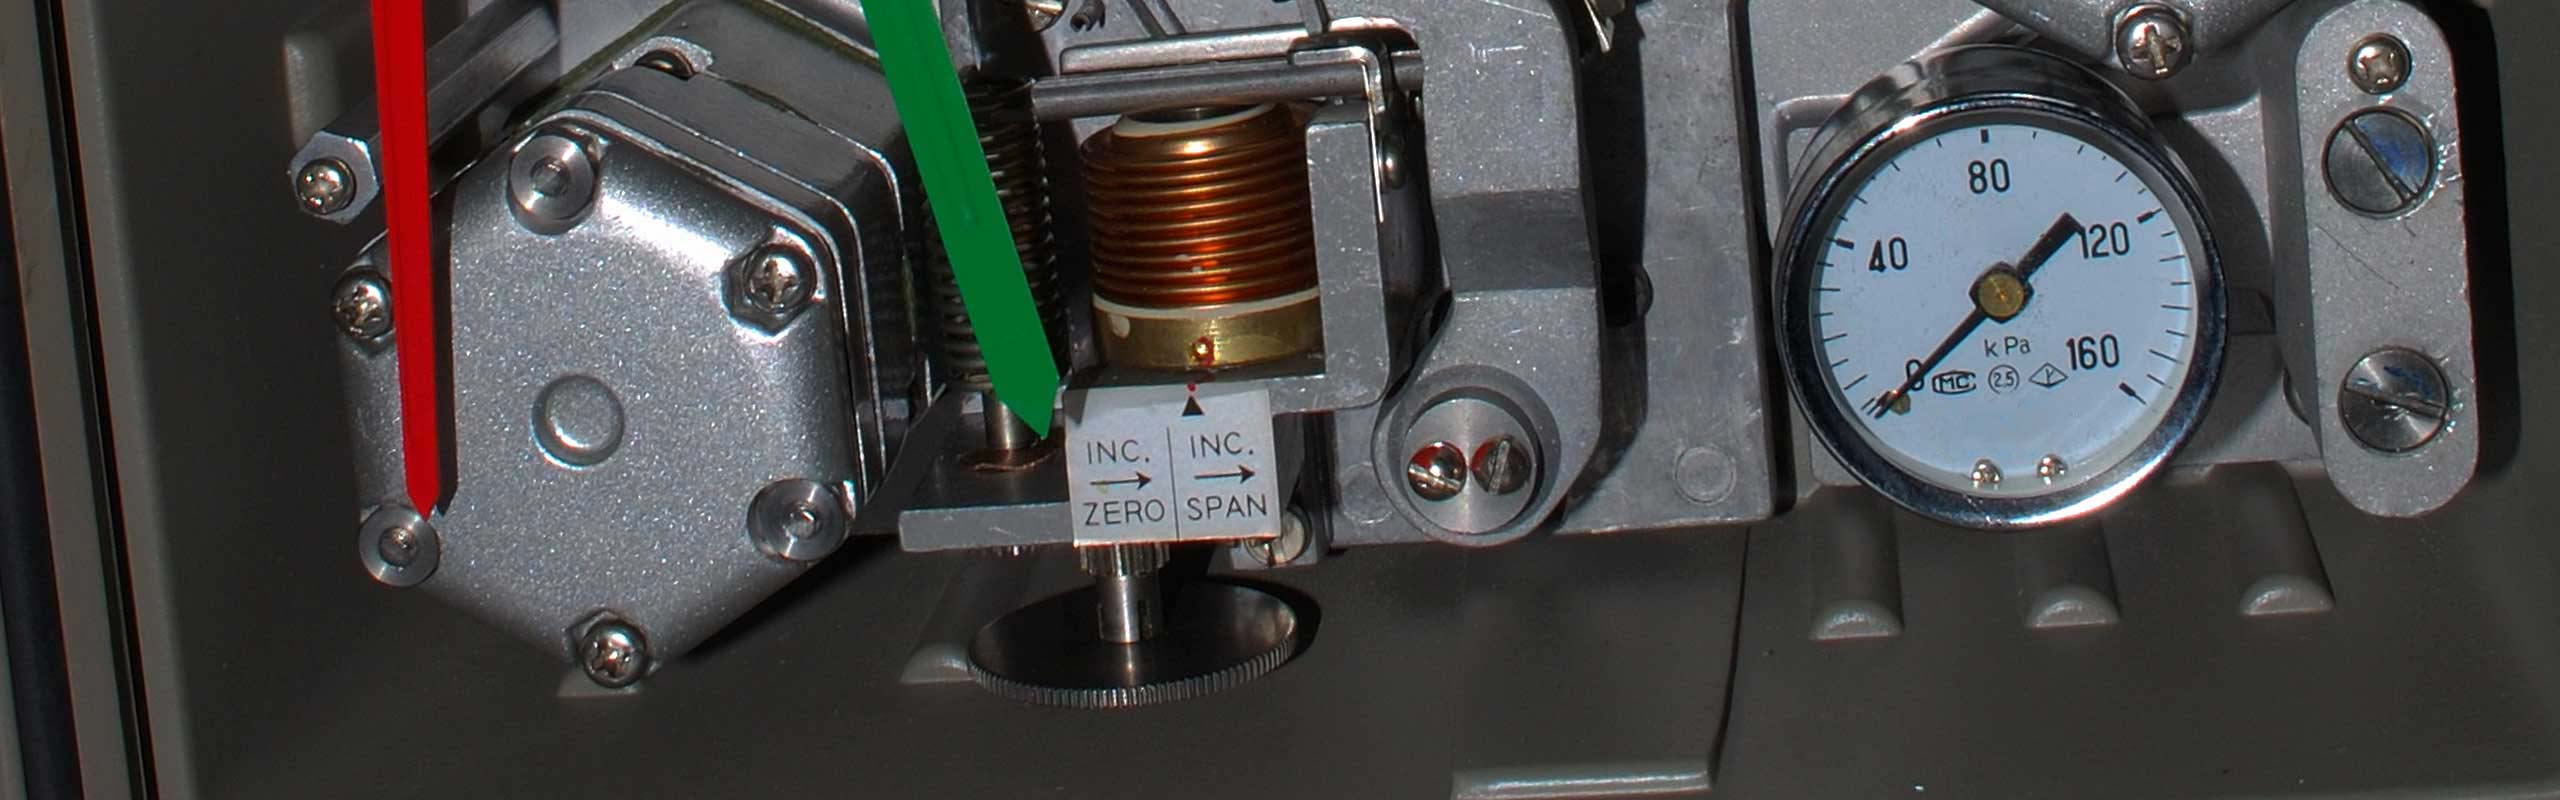 KDP 61/62 (Flange Type) Pneumatic Differential Pressure Transmitter